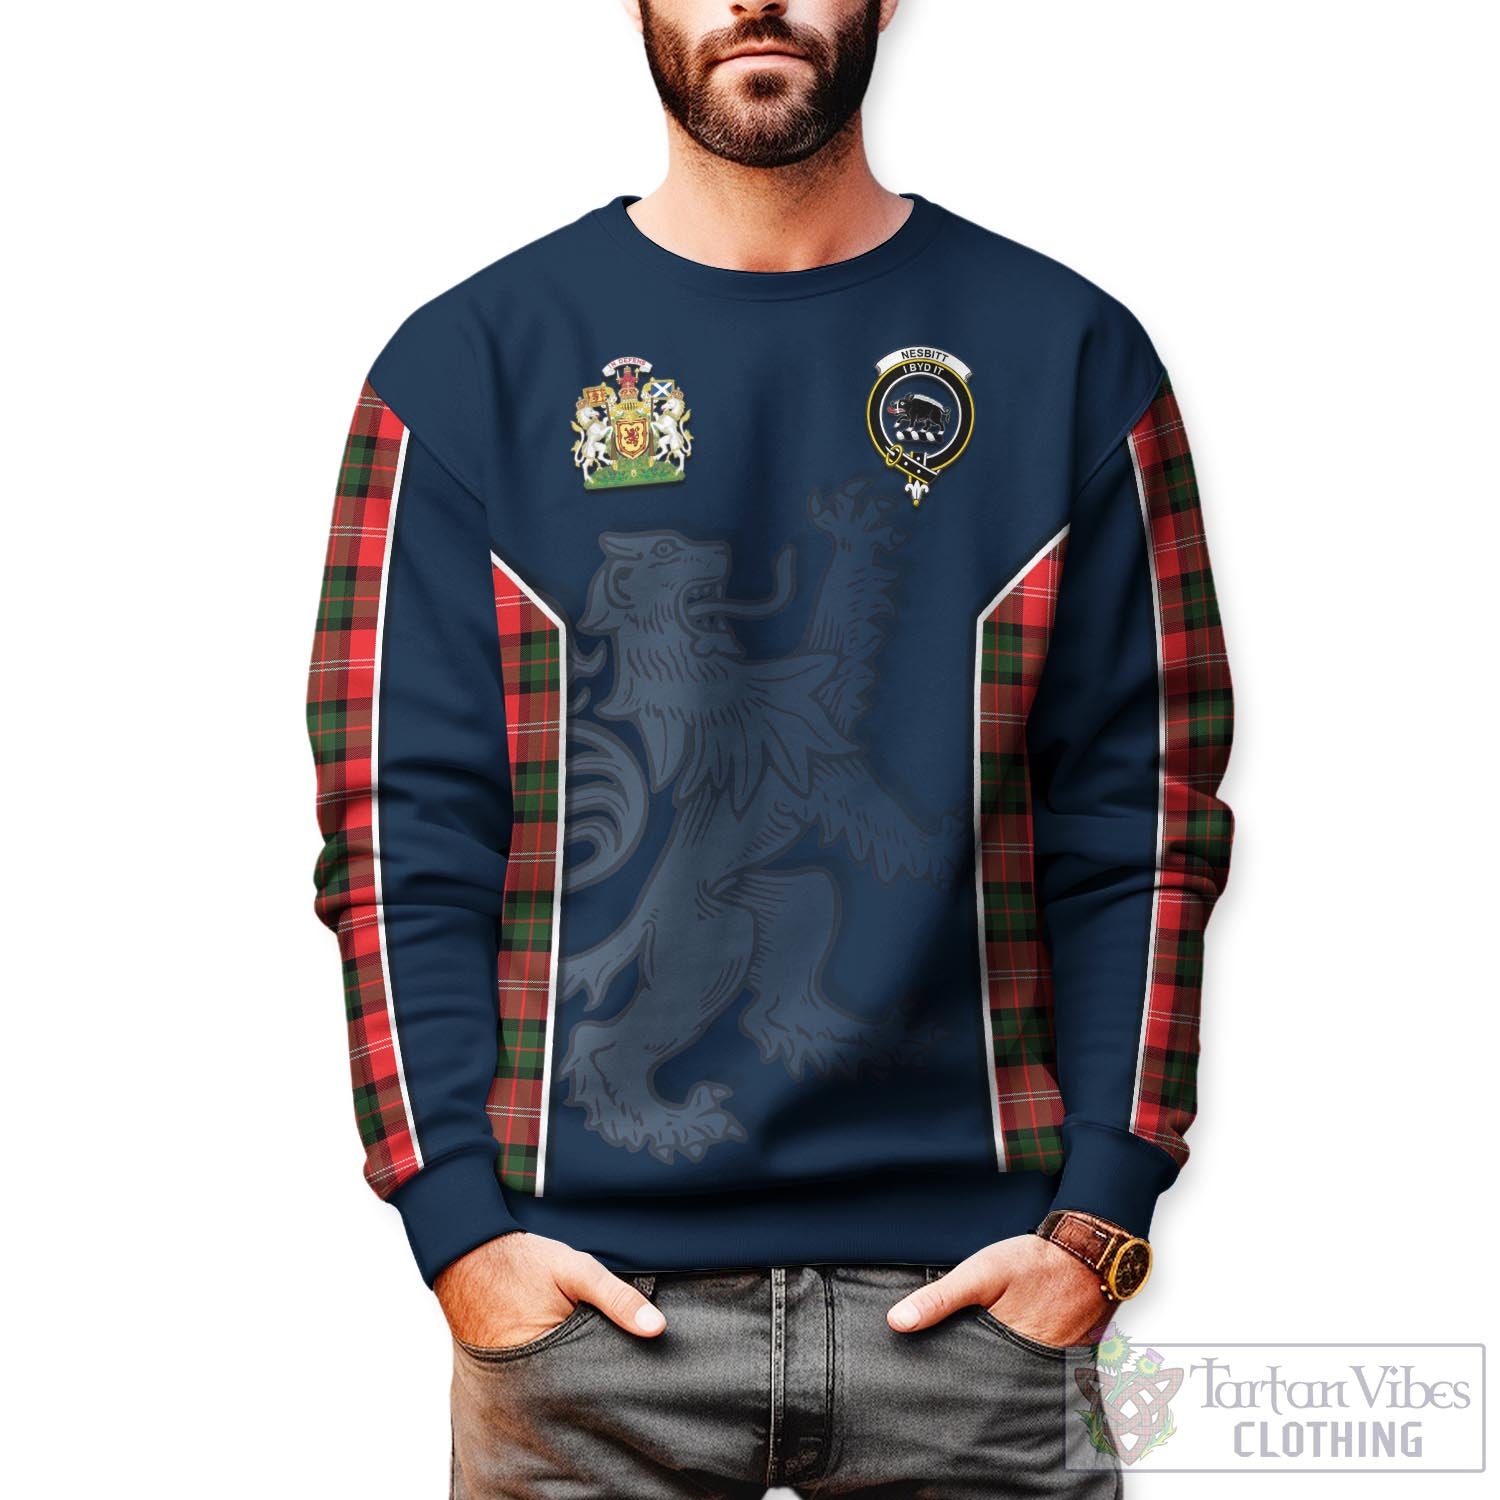 Tartan Vibes Clothing Nesbitt Modern Tartan Sweater with Family Crest and Lion Rampant Vibes Sport Style